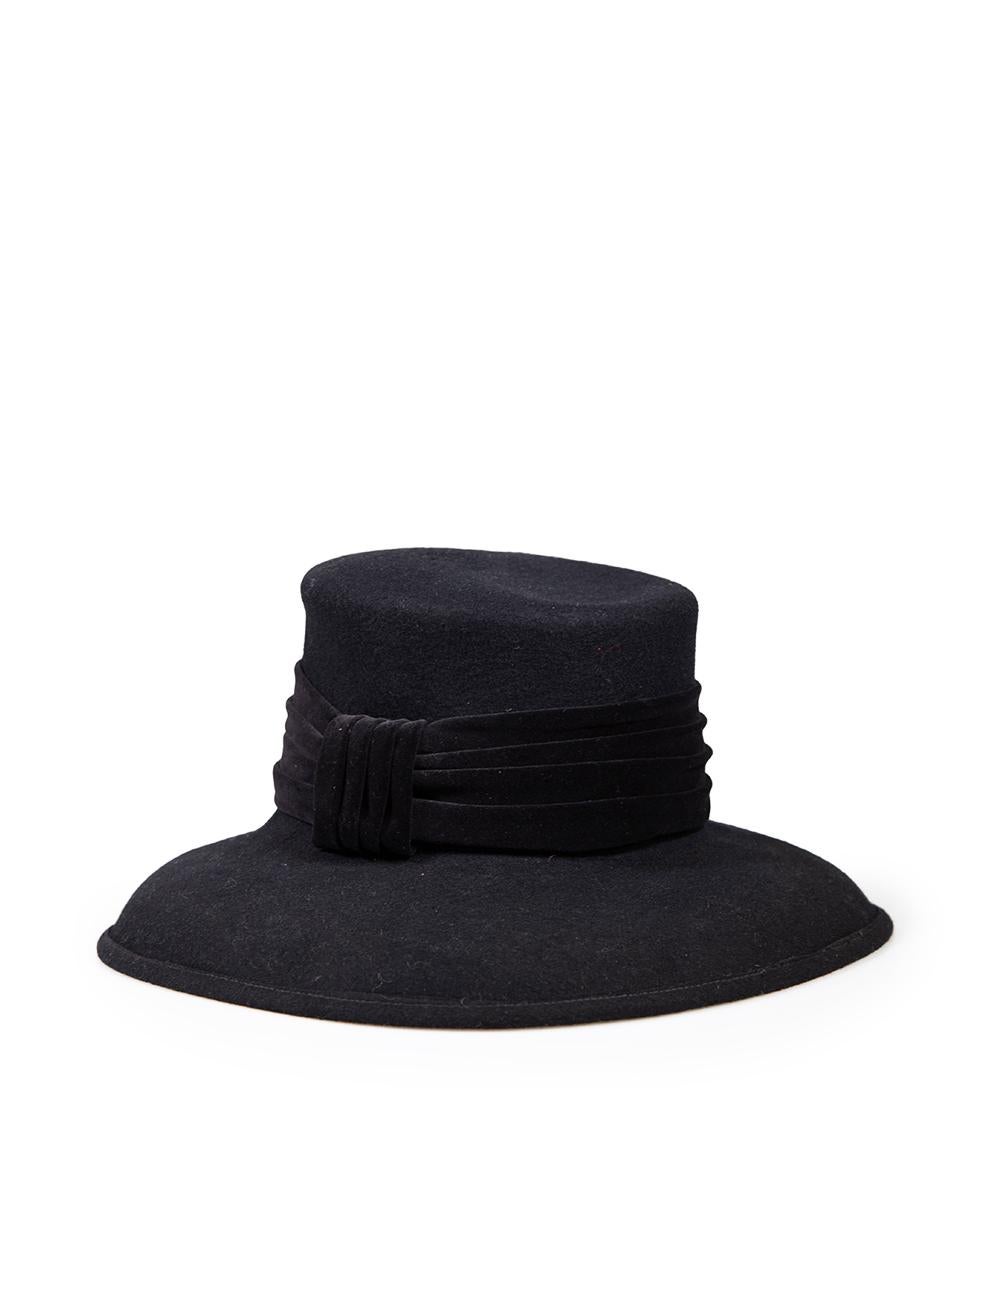 Women's Kangol Vintage Black Wool Felt Fedora Hat For Sale